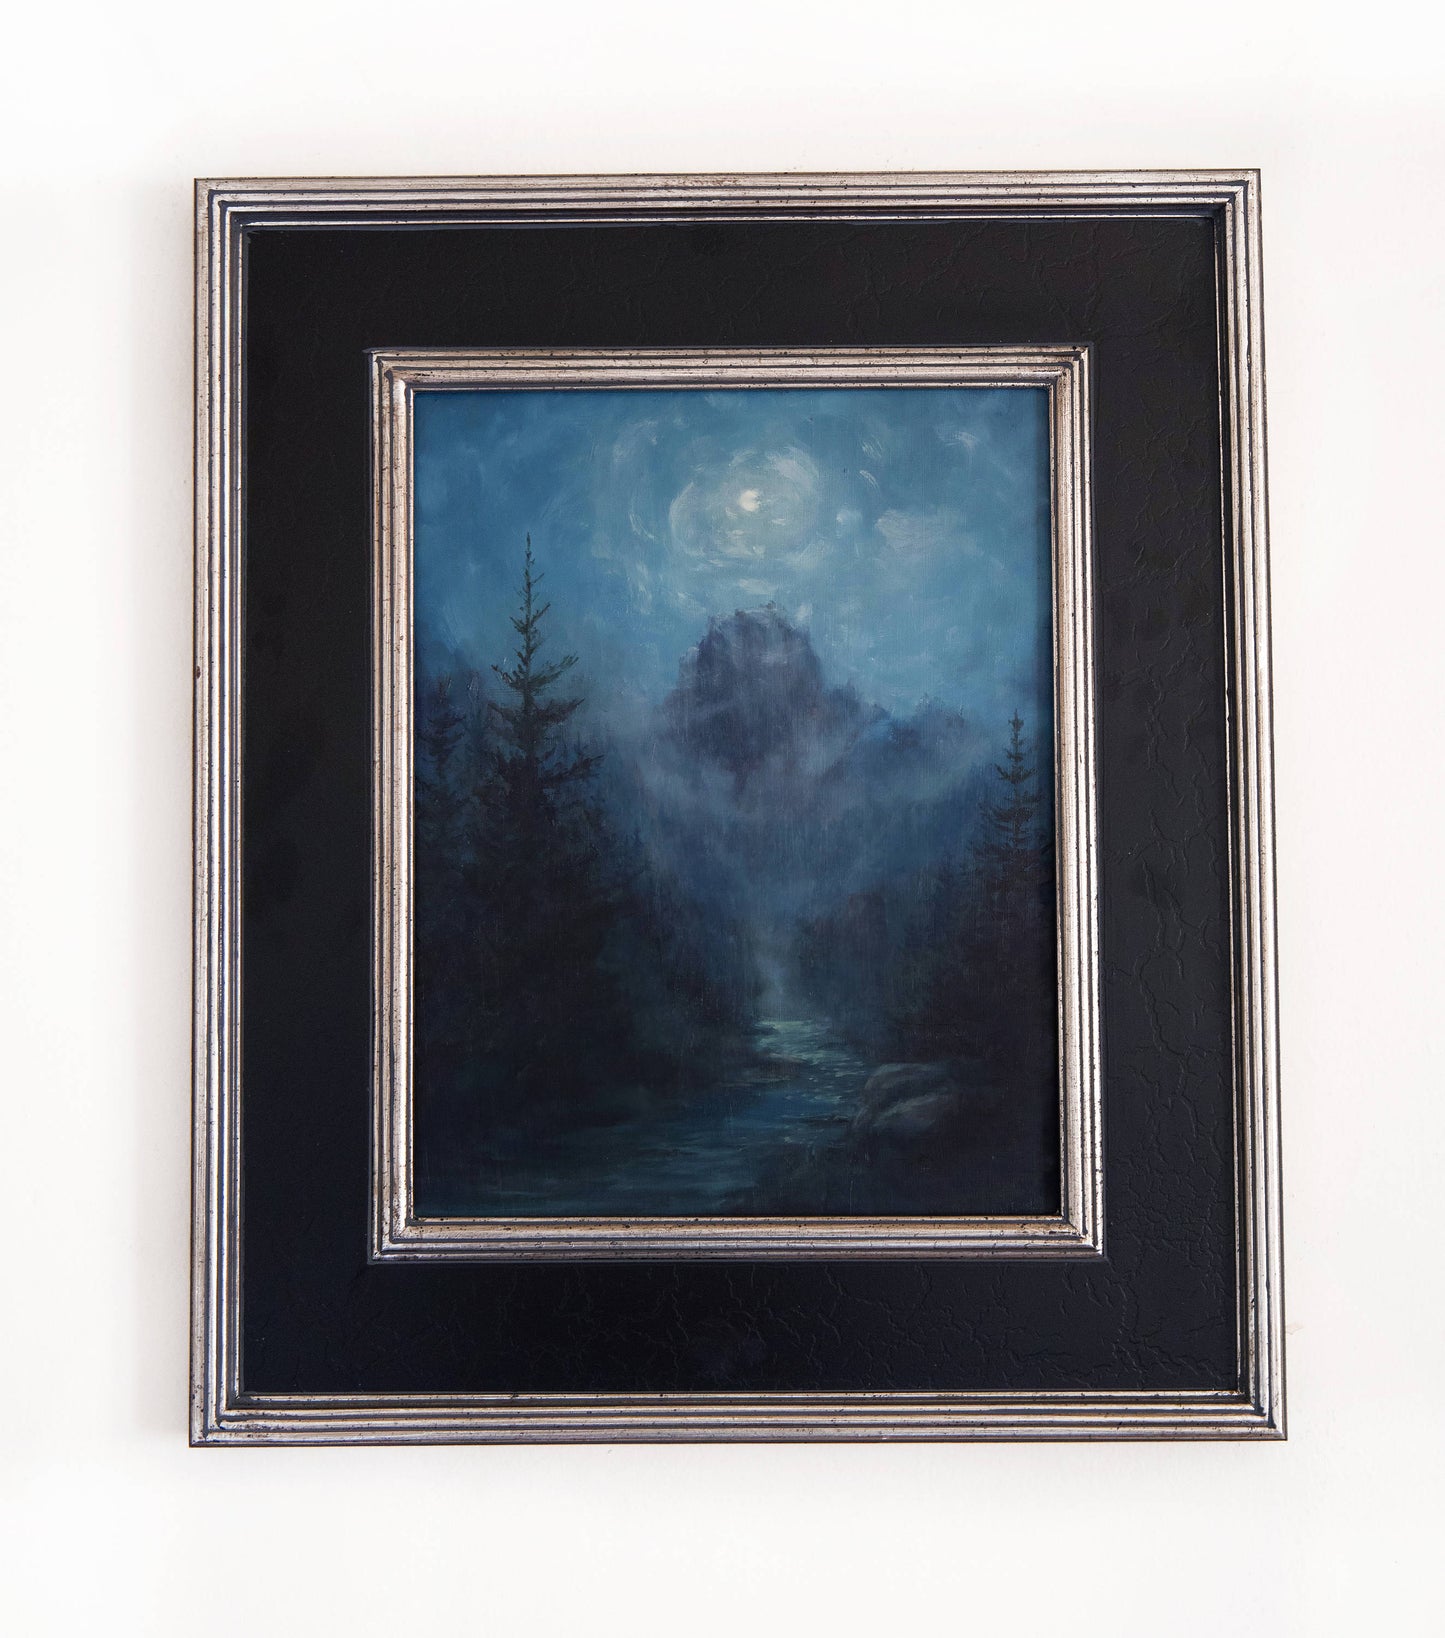 Enchanted Light. Original landscape oil painting. 11x14in. Framed.